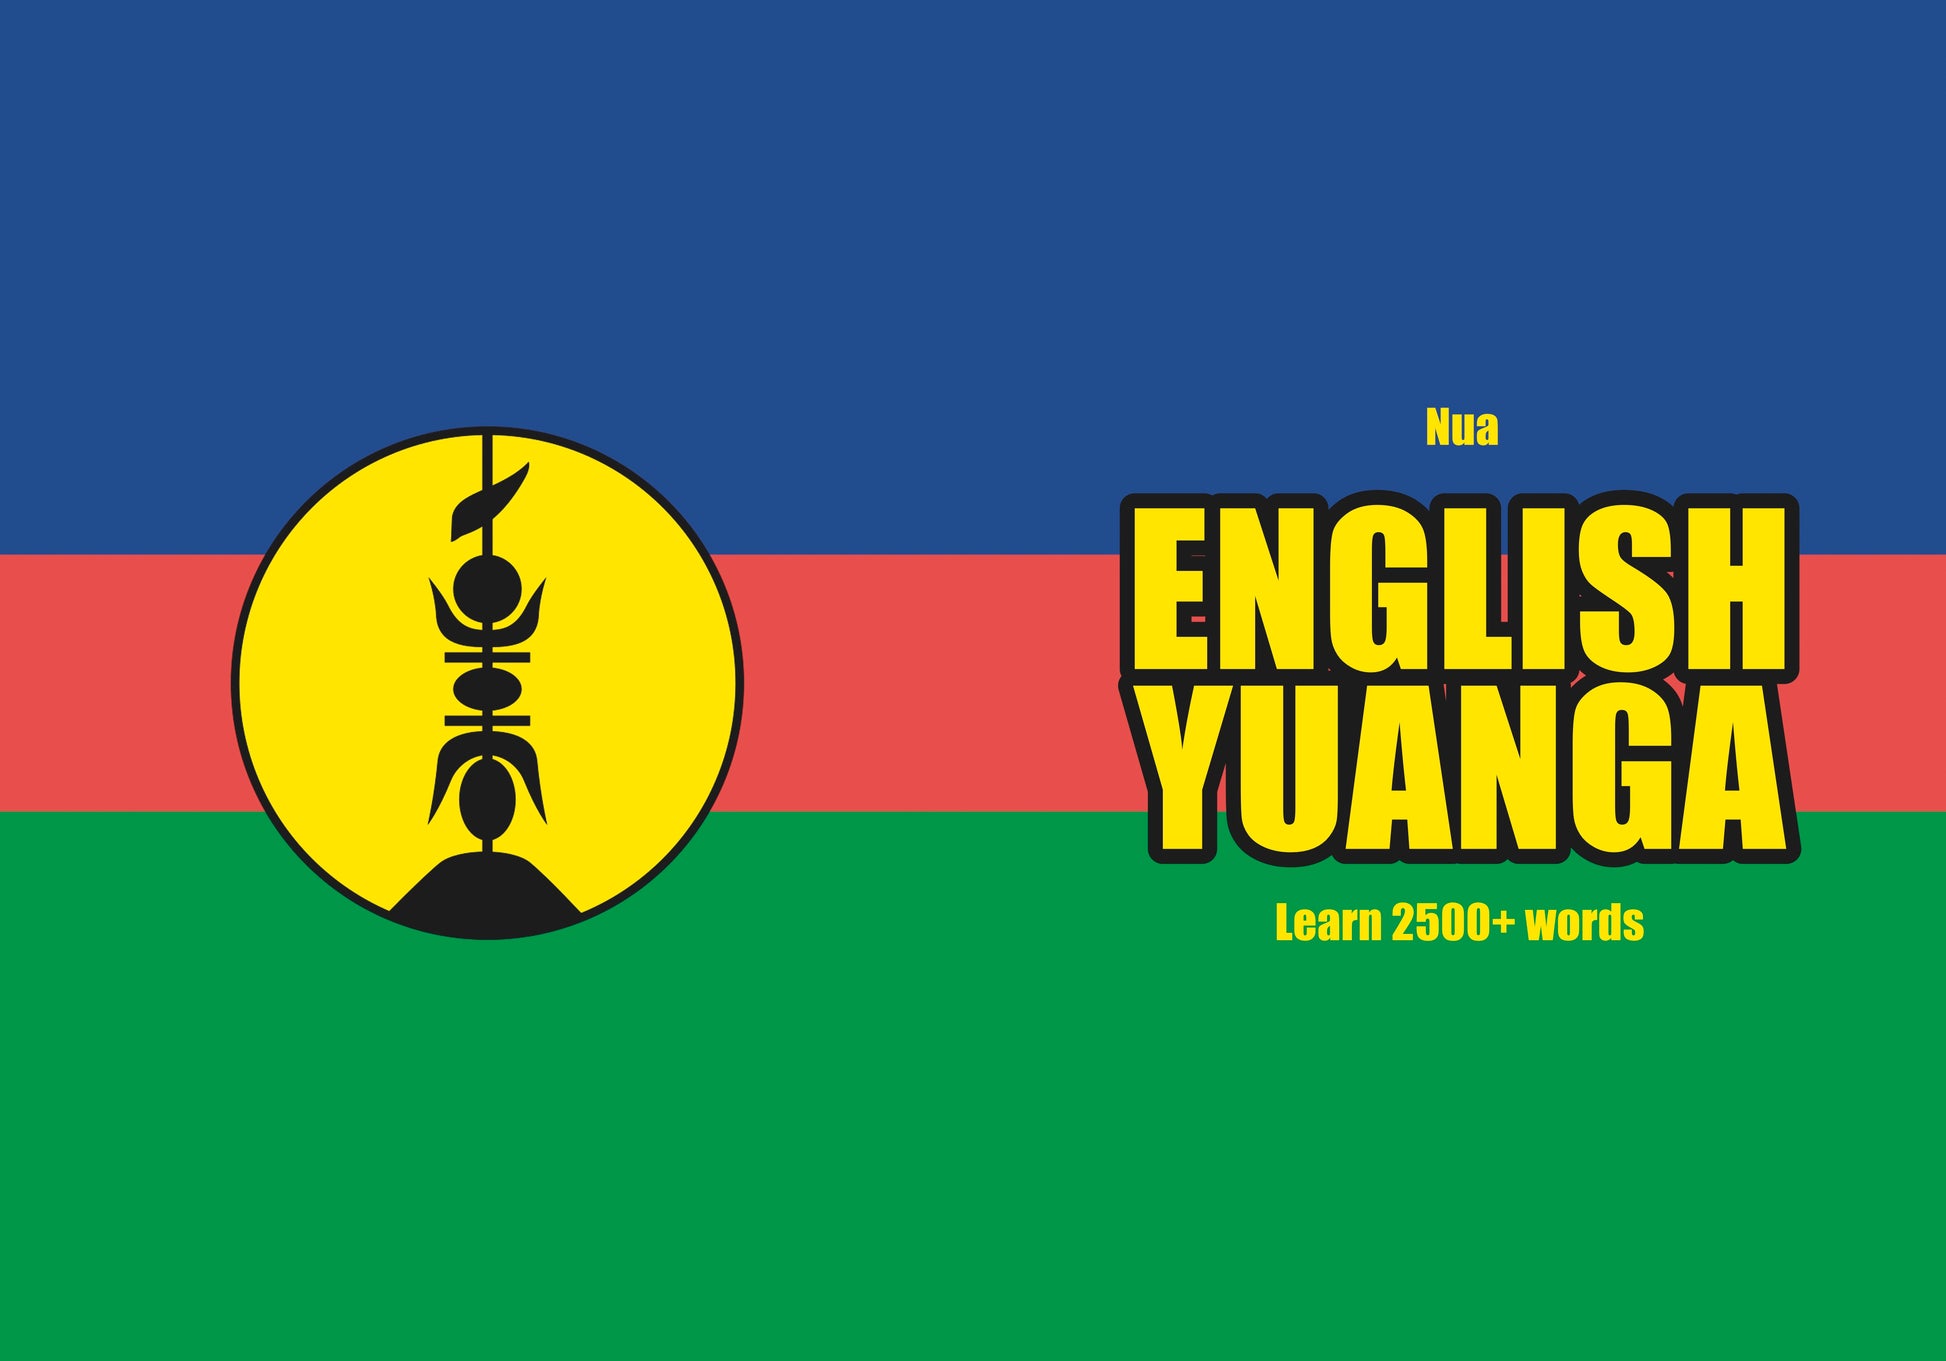 Yuanga language learning notebook cover